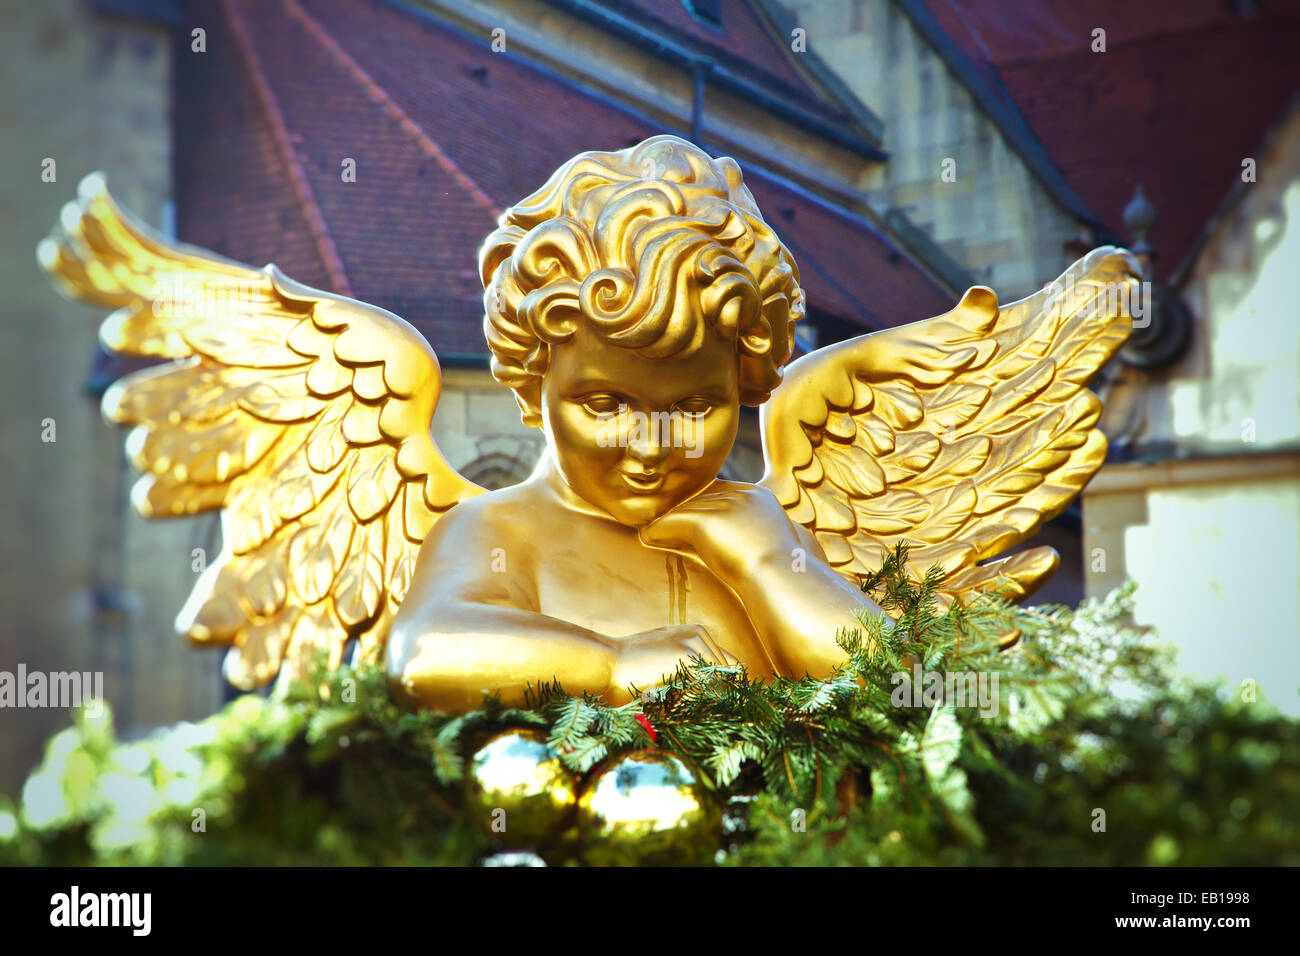 Golden angel Stock Photo